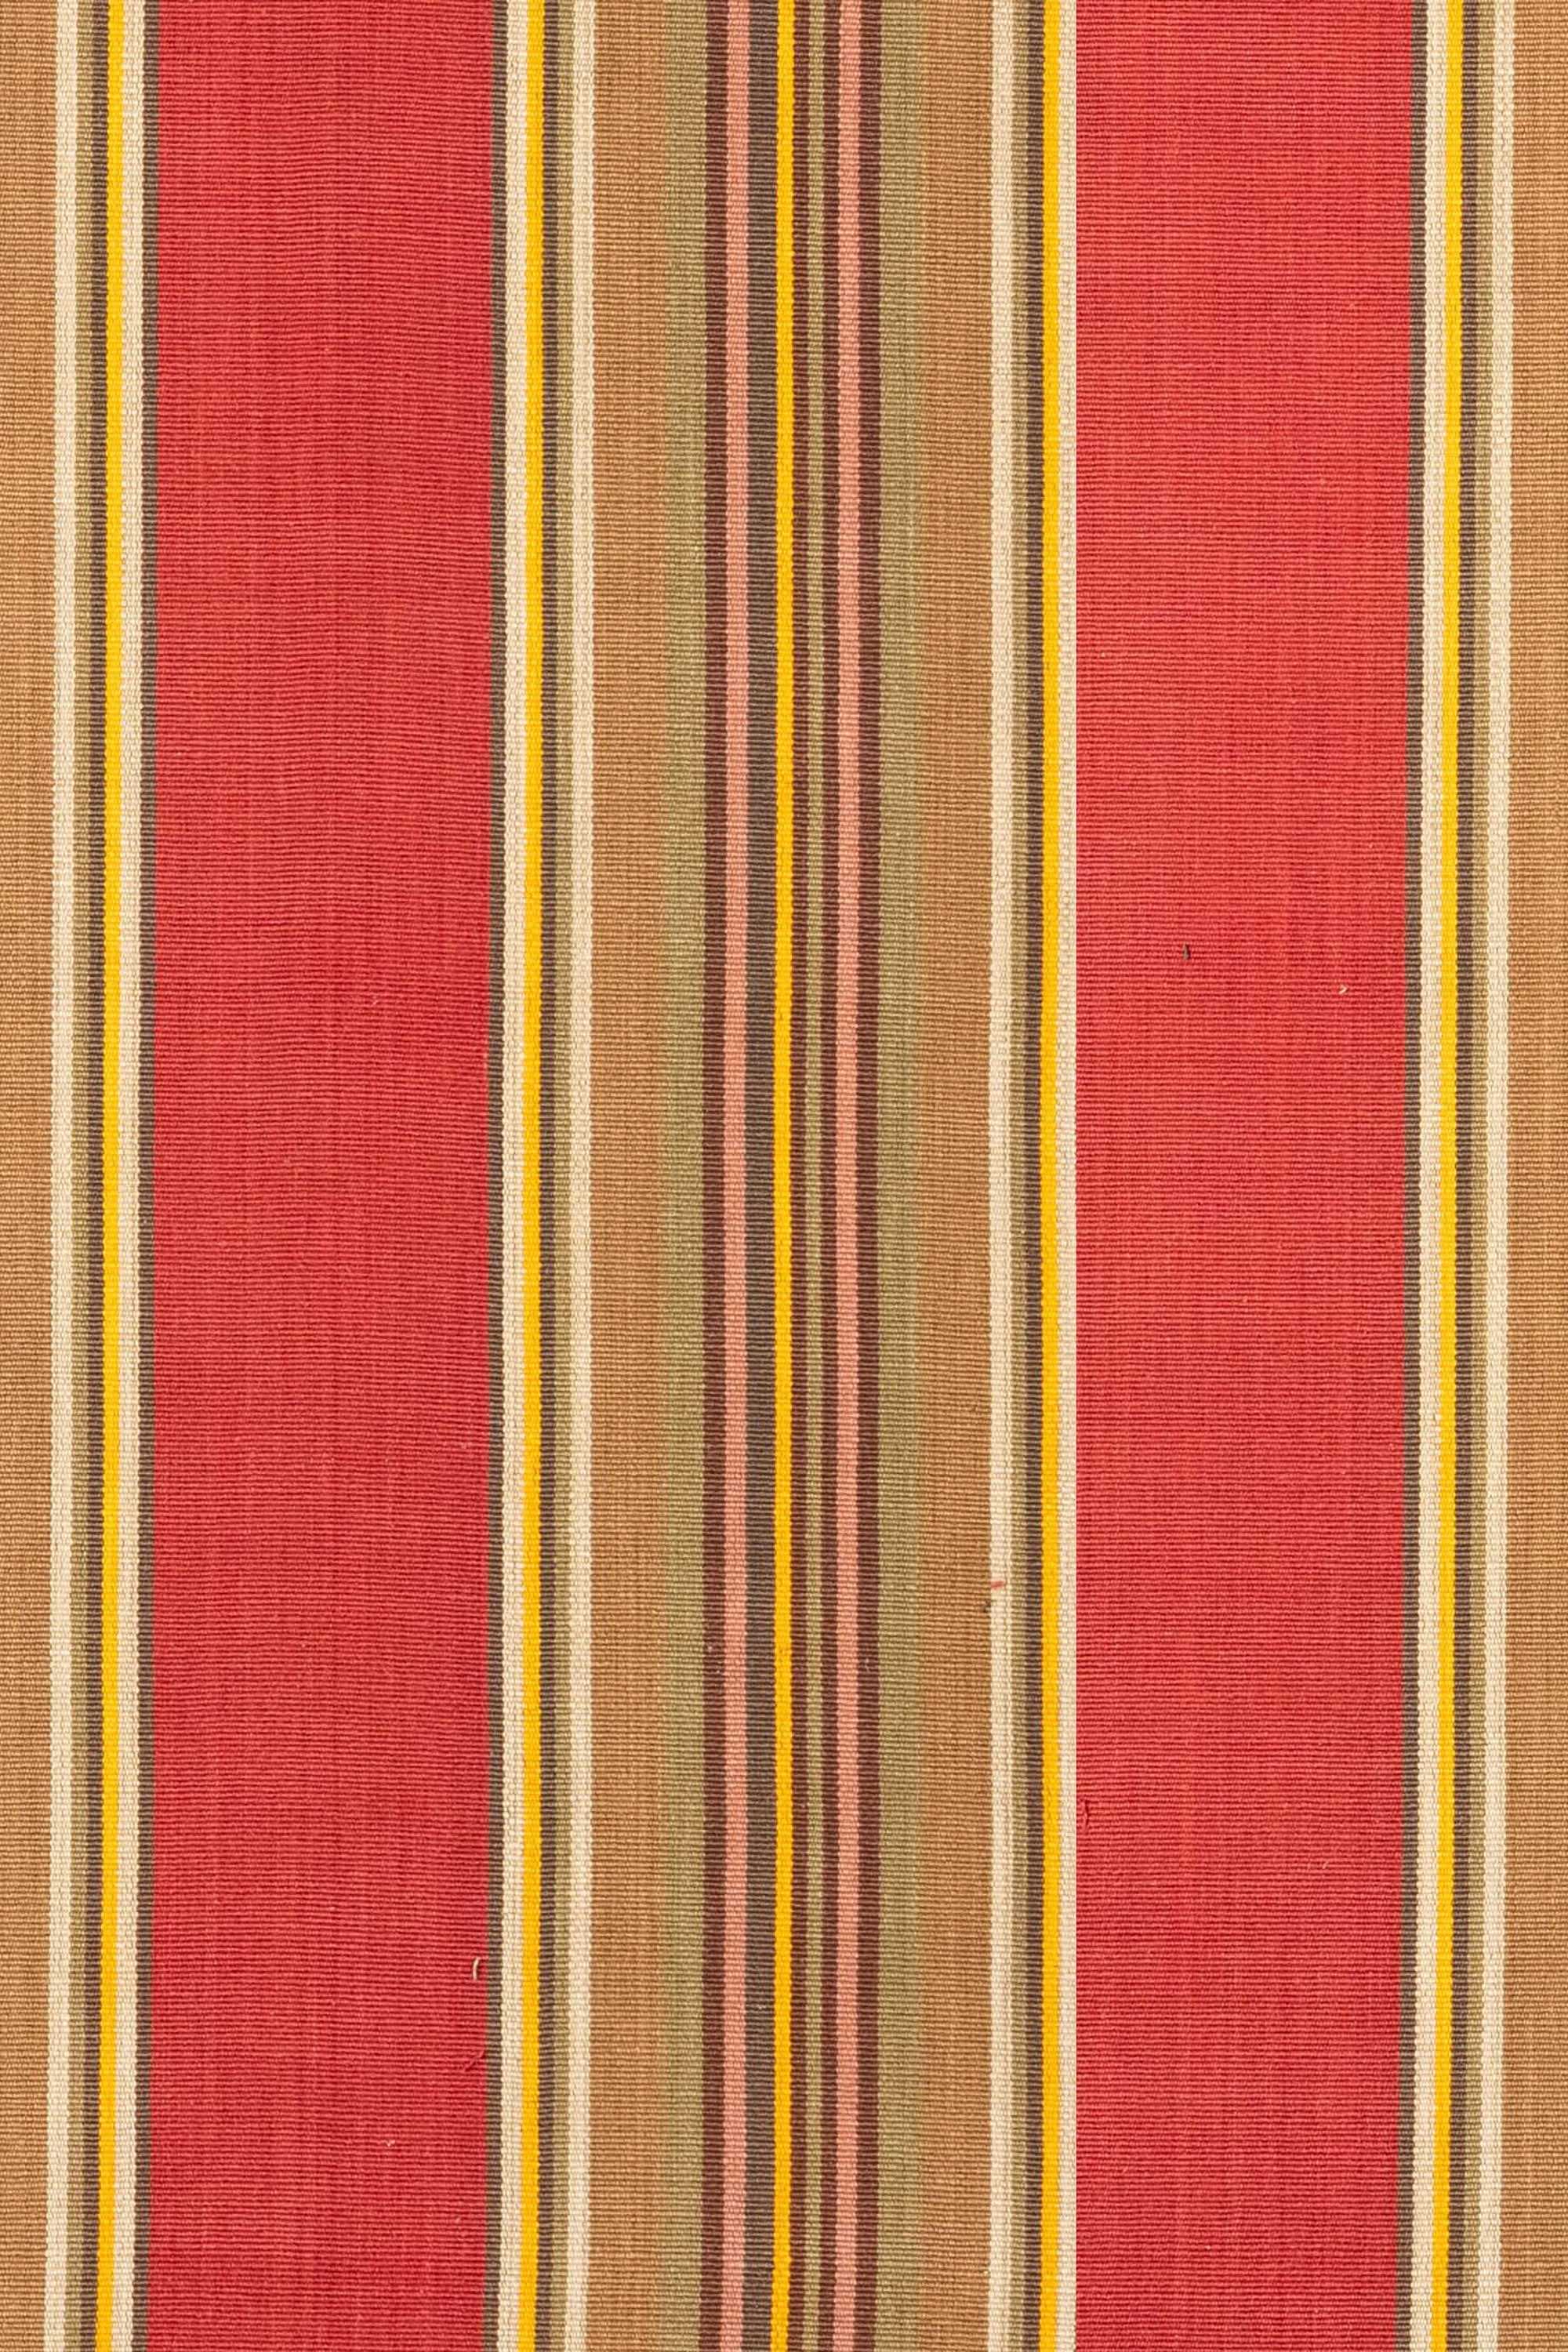 Fabric by the Yard, Serape, Saddle Blanket, Hubble,113